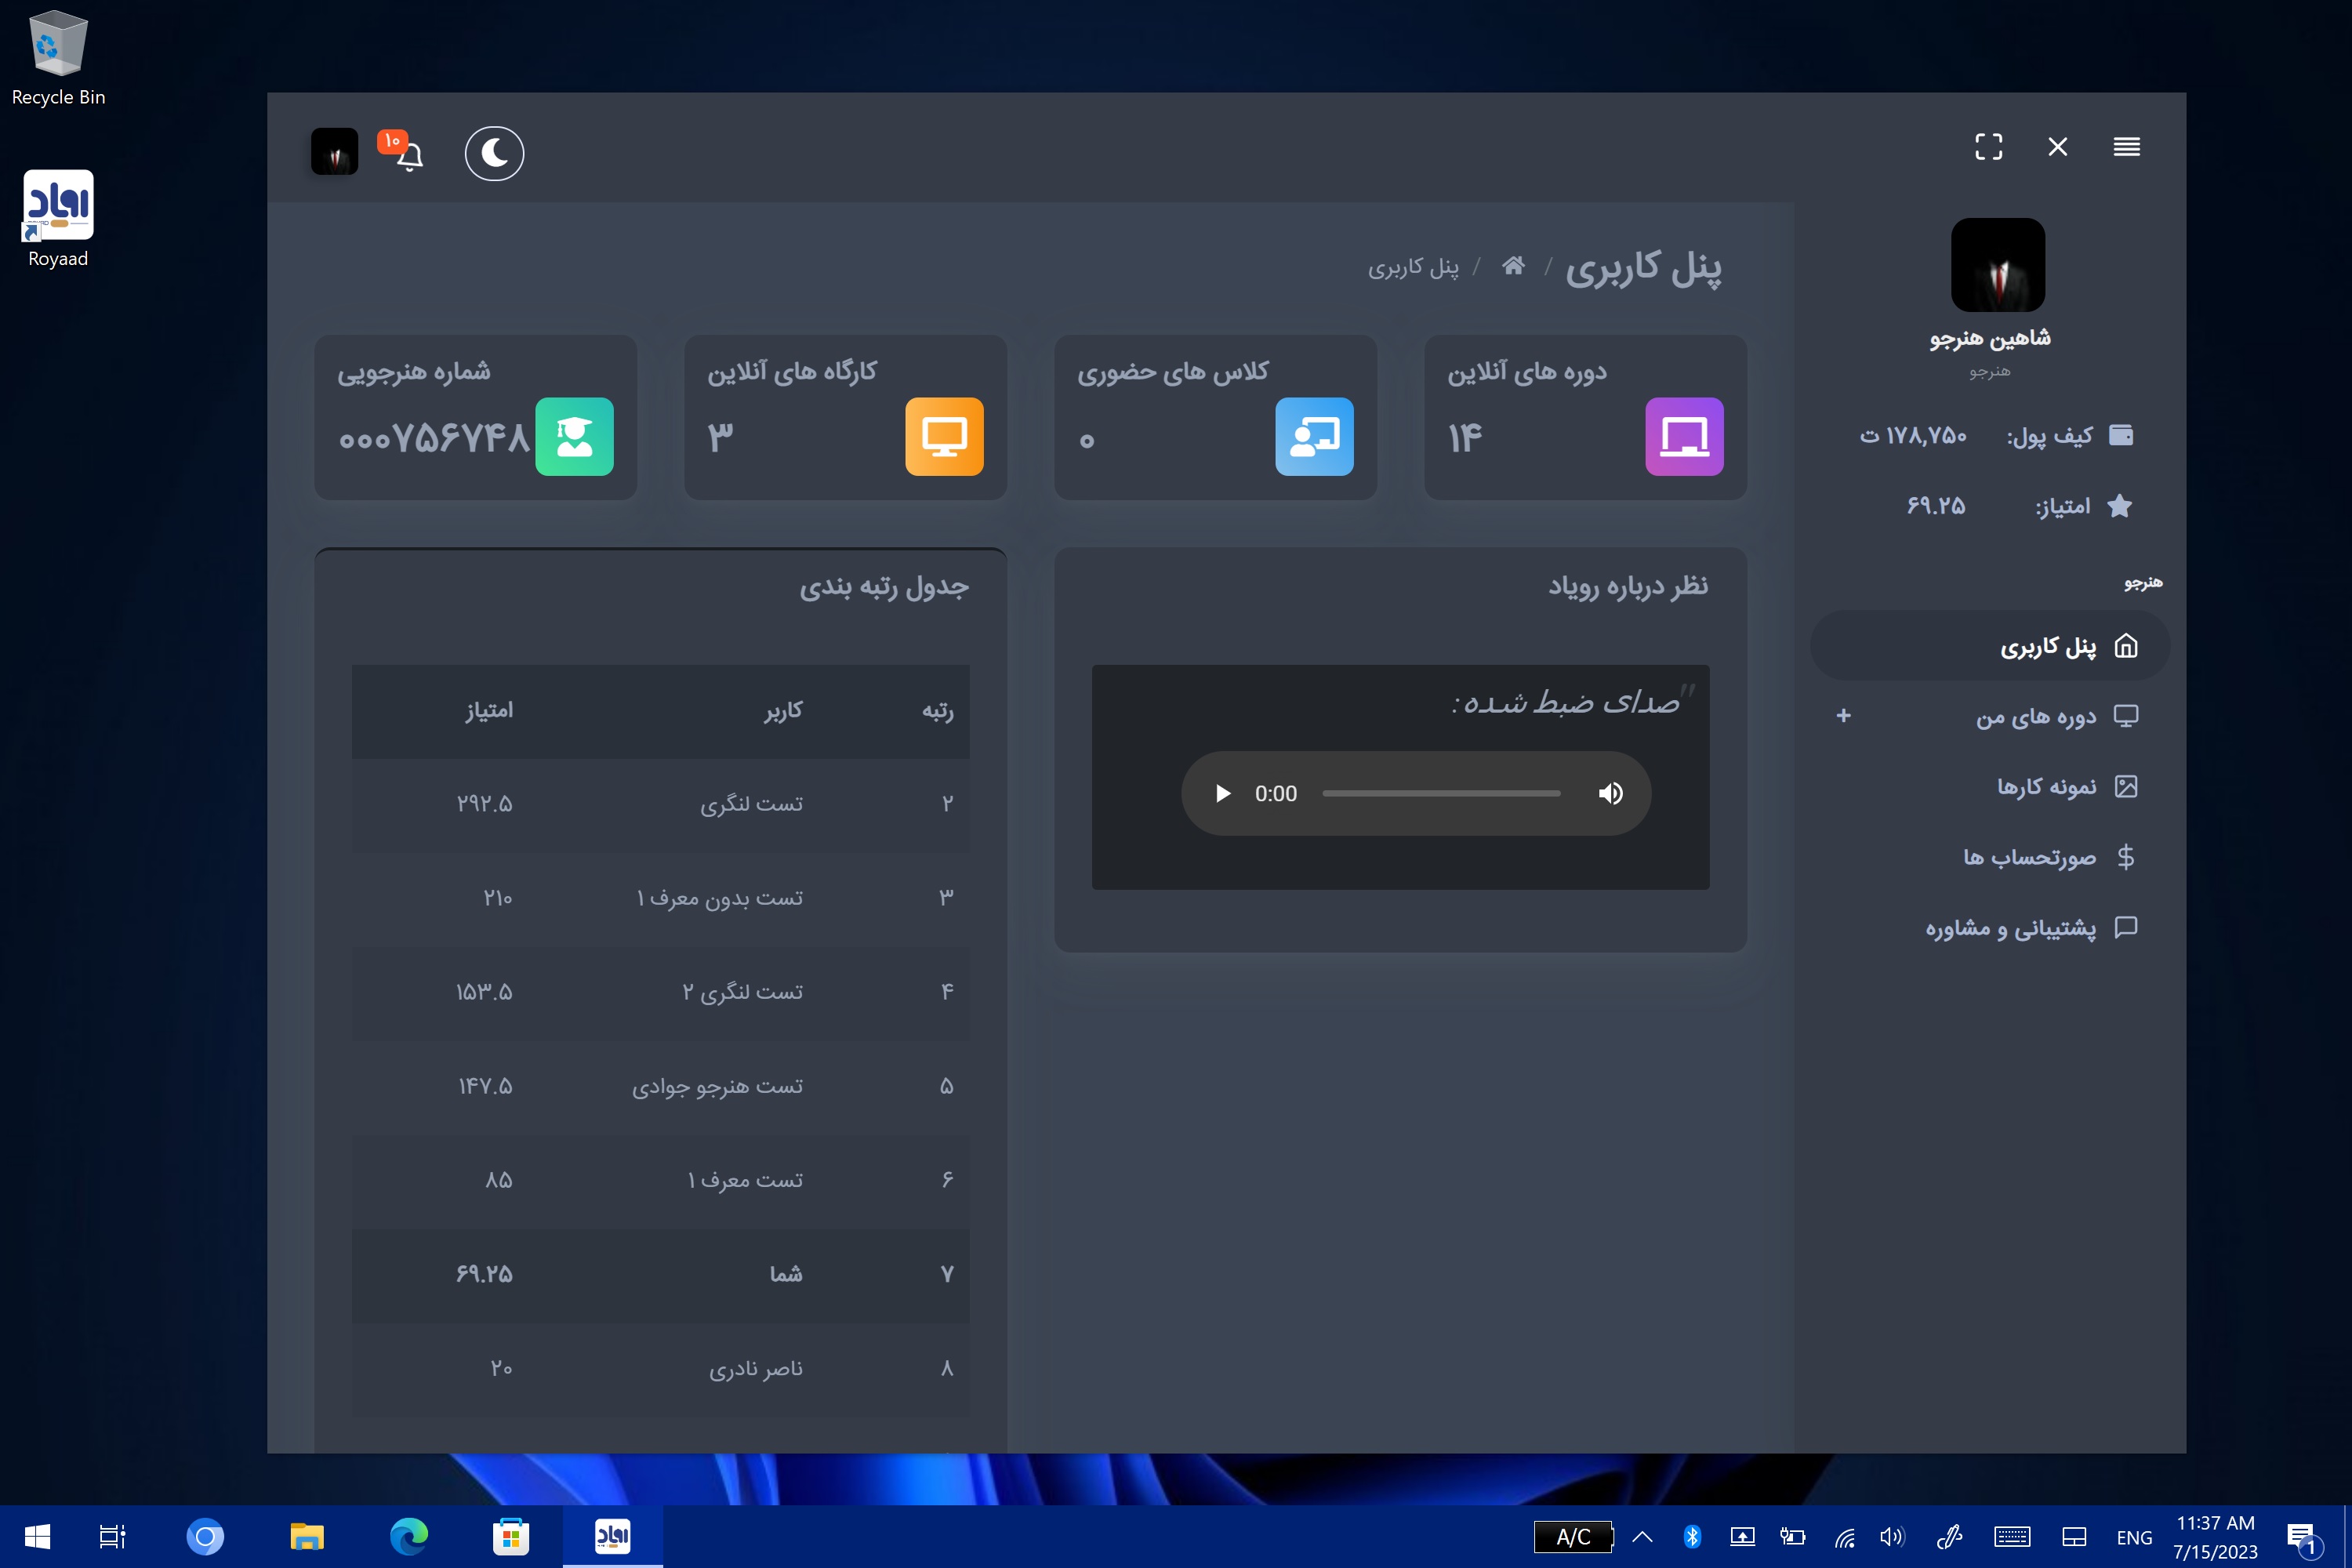 Shahinsoft.ir Royaad desktop application Dark mode